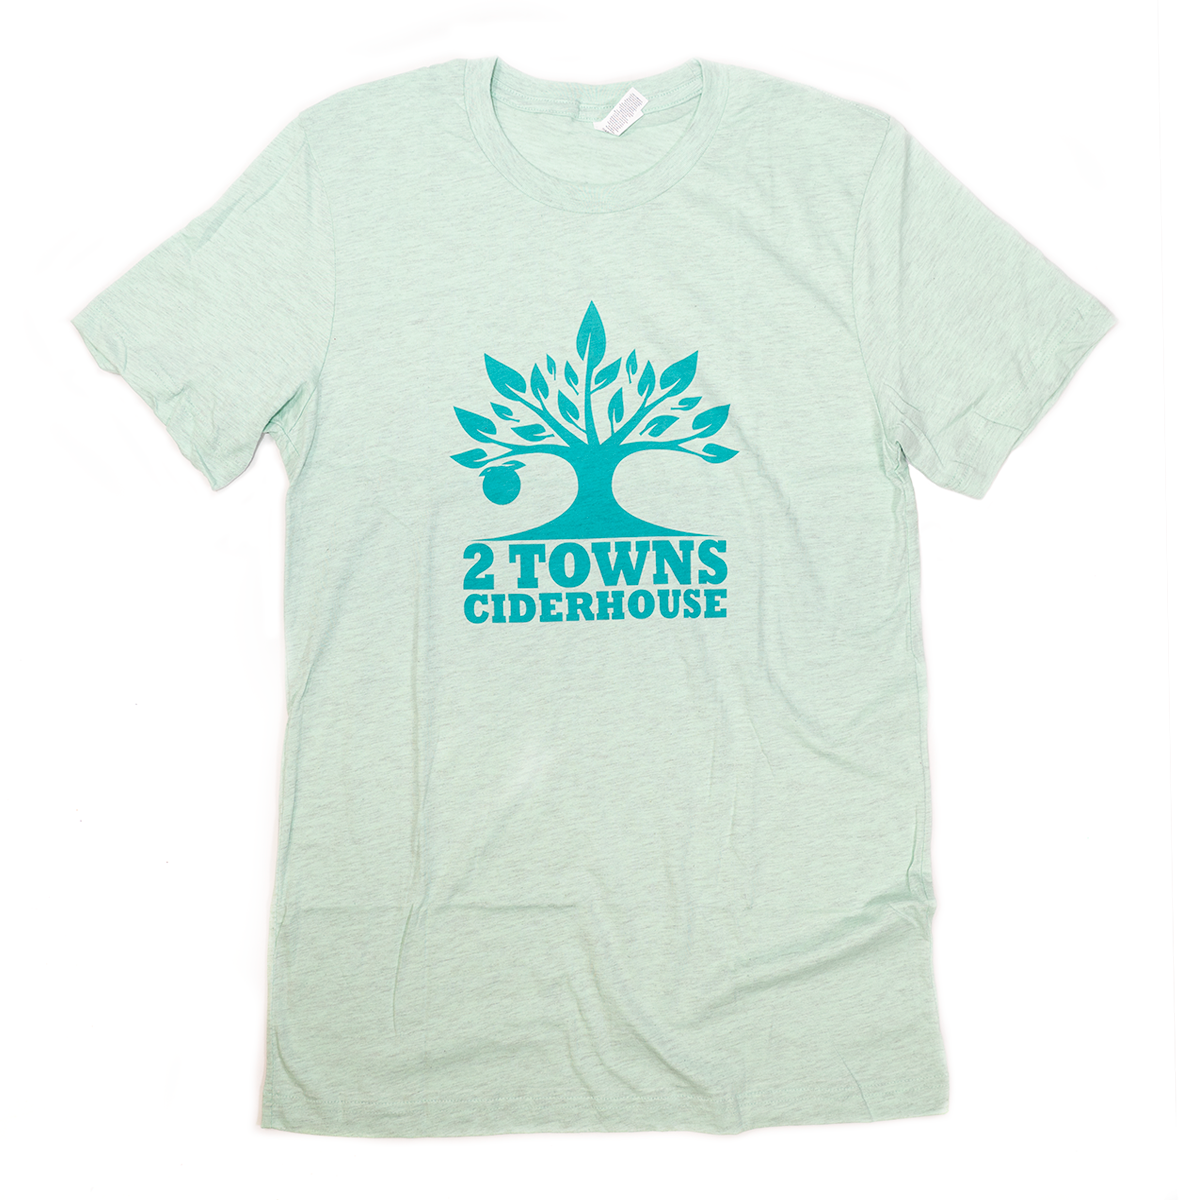 2019_2Towns_logo-tee-mint - 2 Towns Ciderhouse